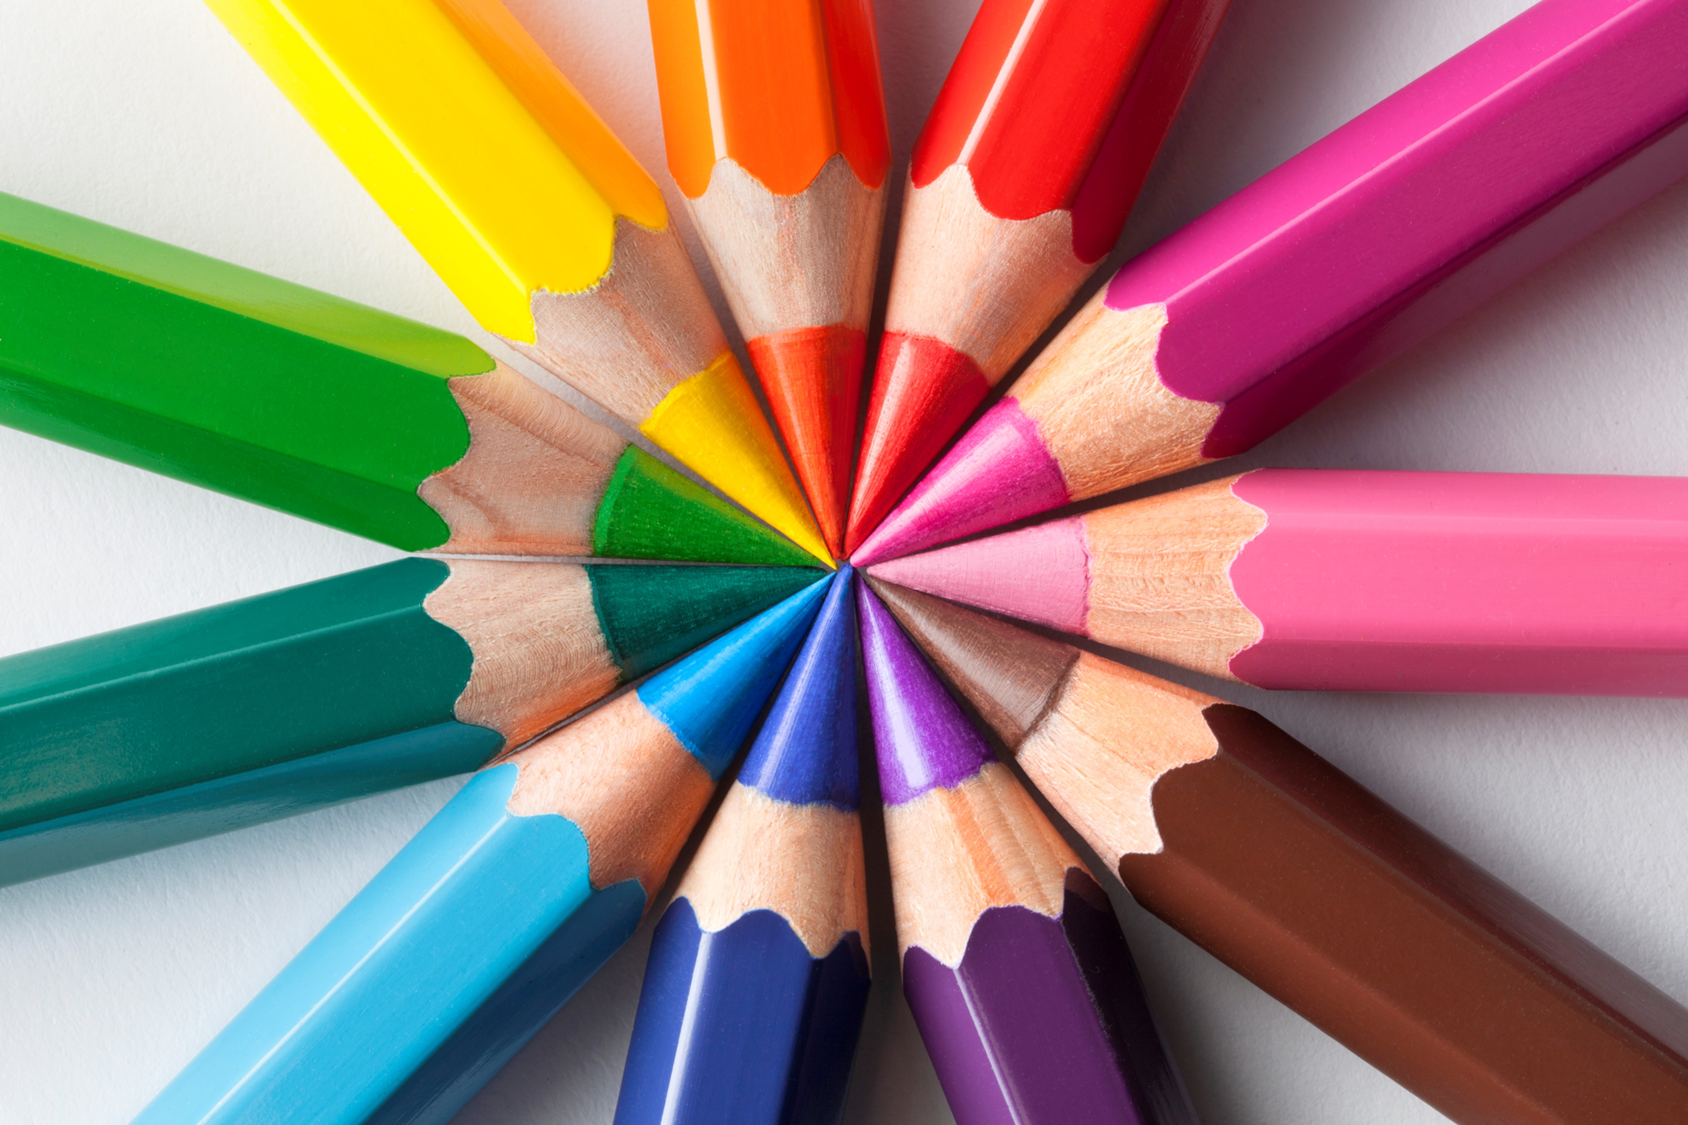 Coloured pencils forming a circle shape